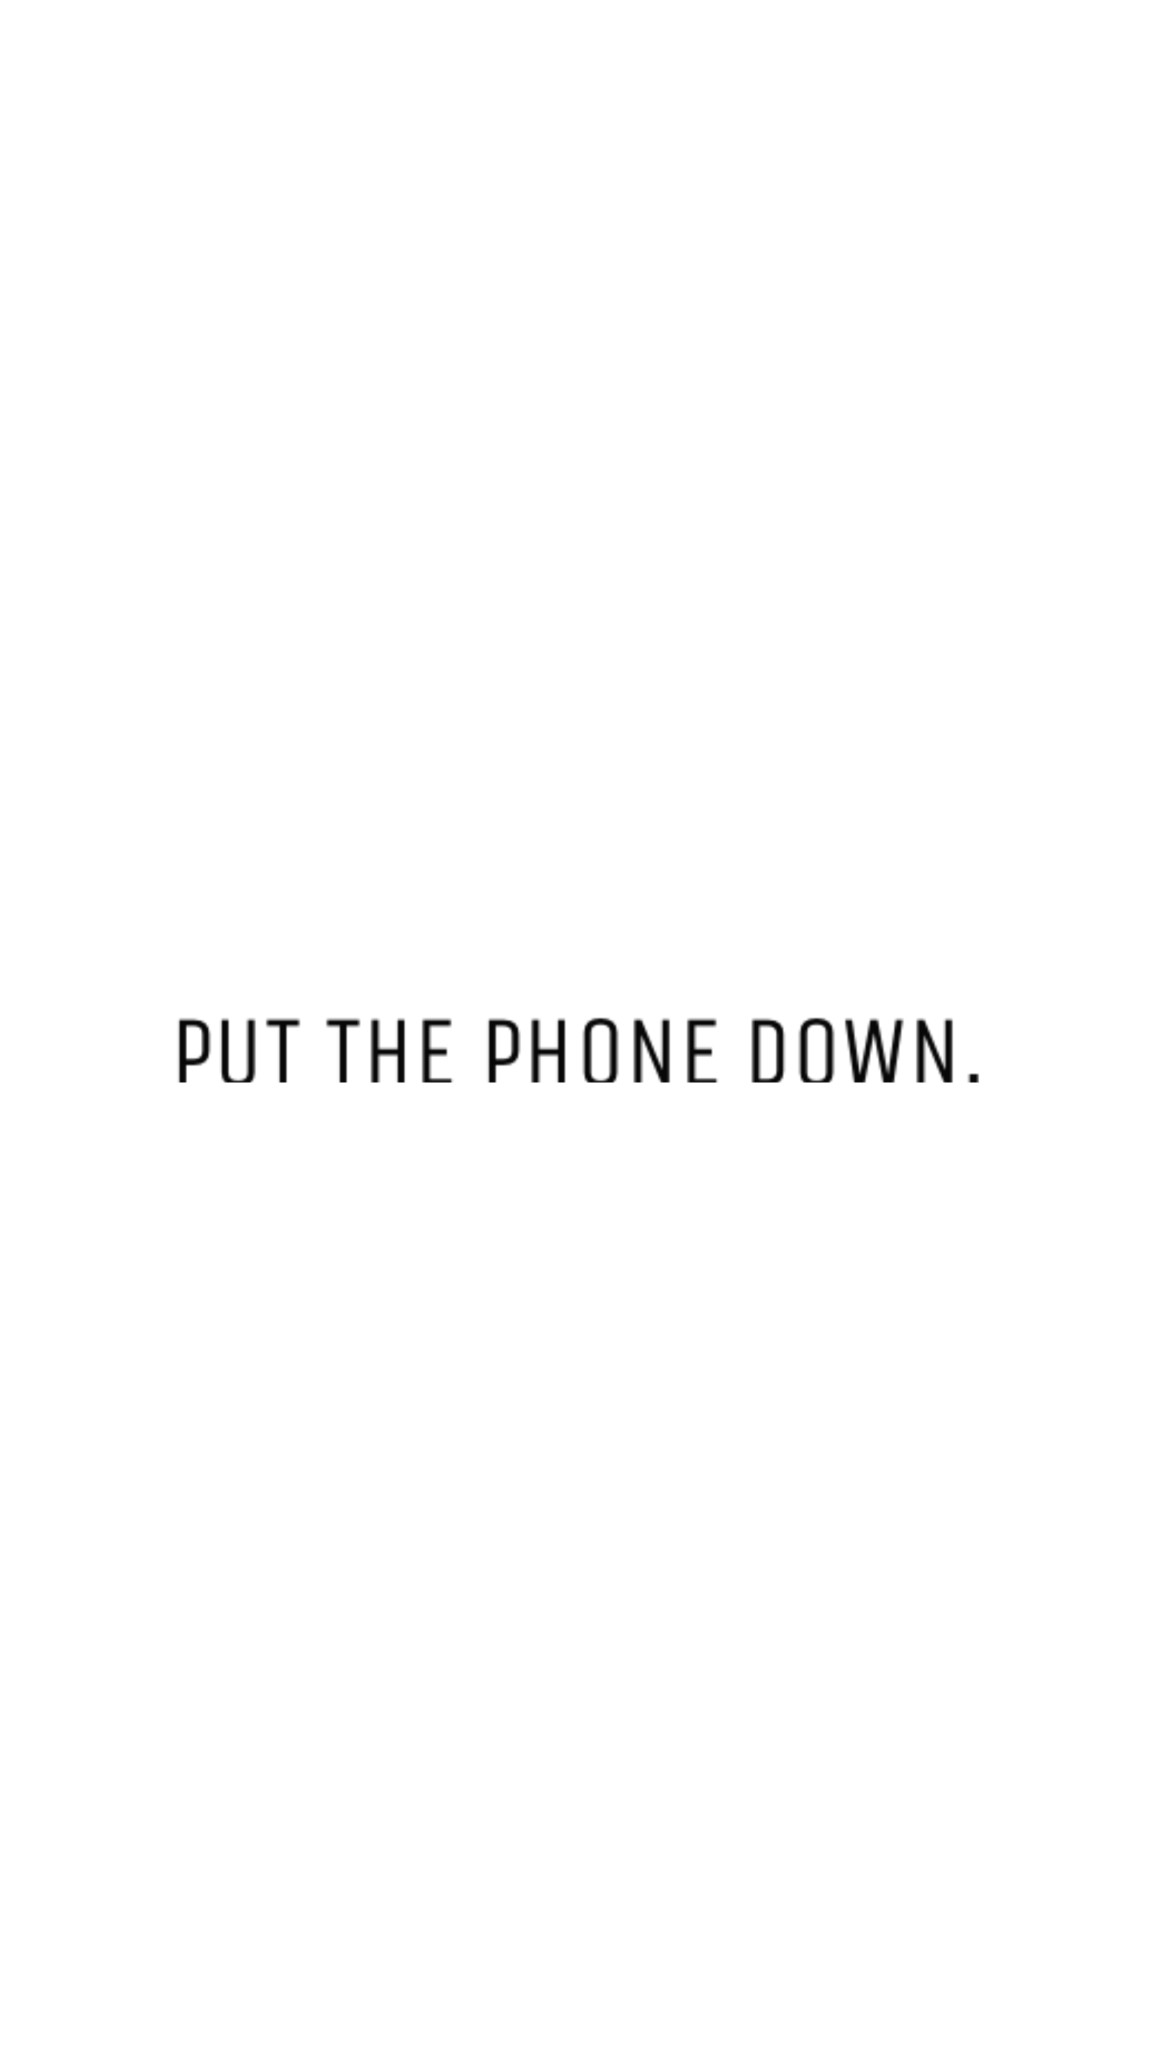 1164x2069 Free Minimal Phone Wallpaper: “Put the Phone Down!” Lock Screen ...